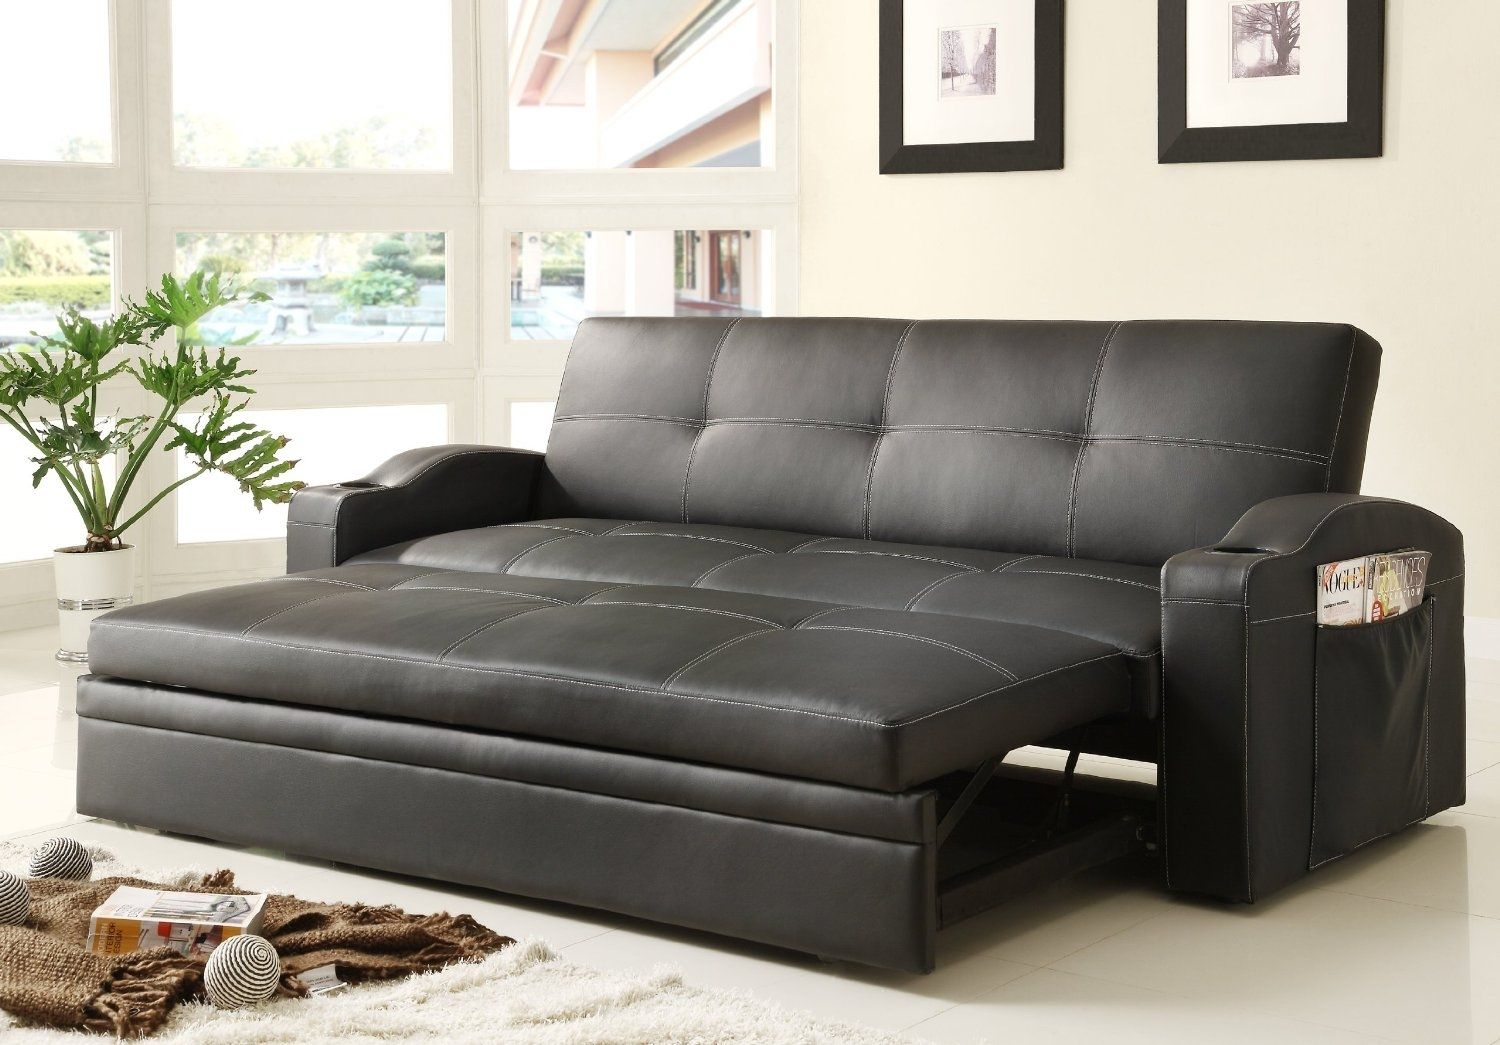 sofa beds & futons costco costco wholesale